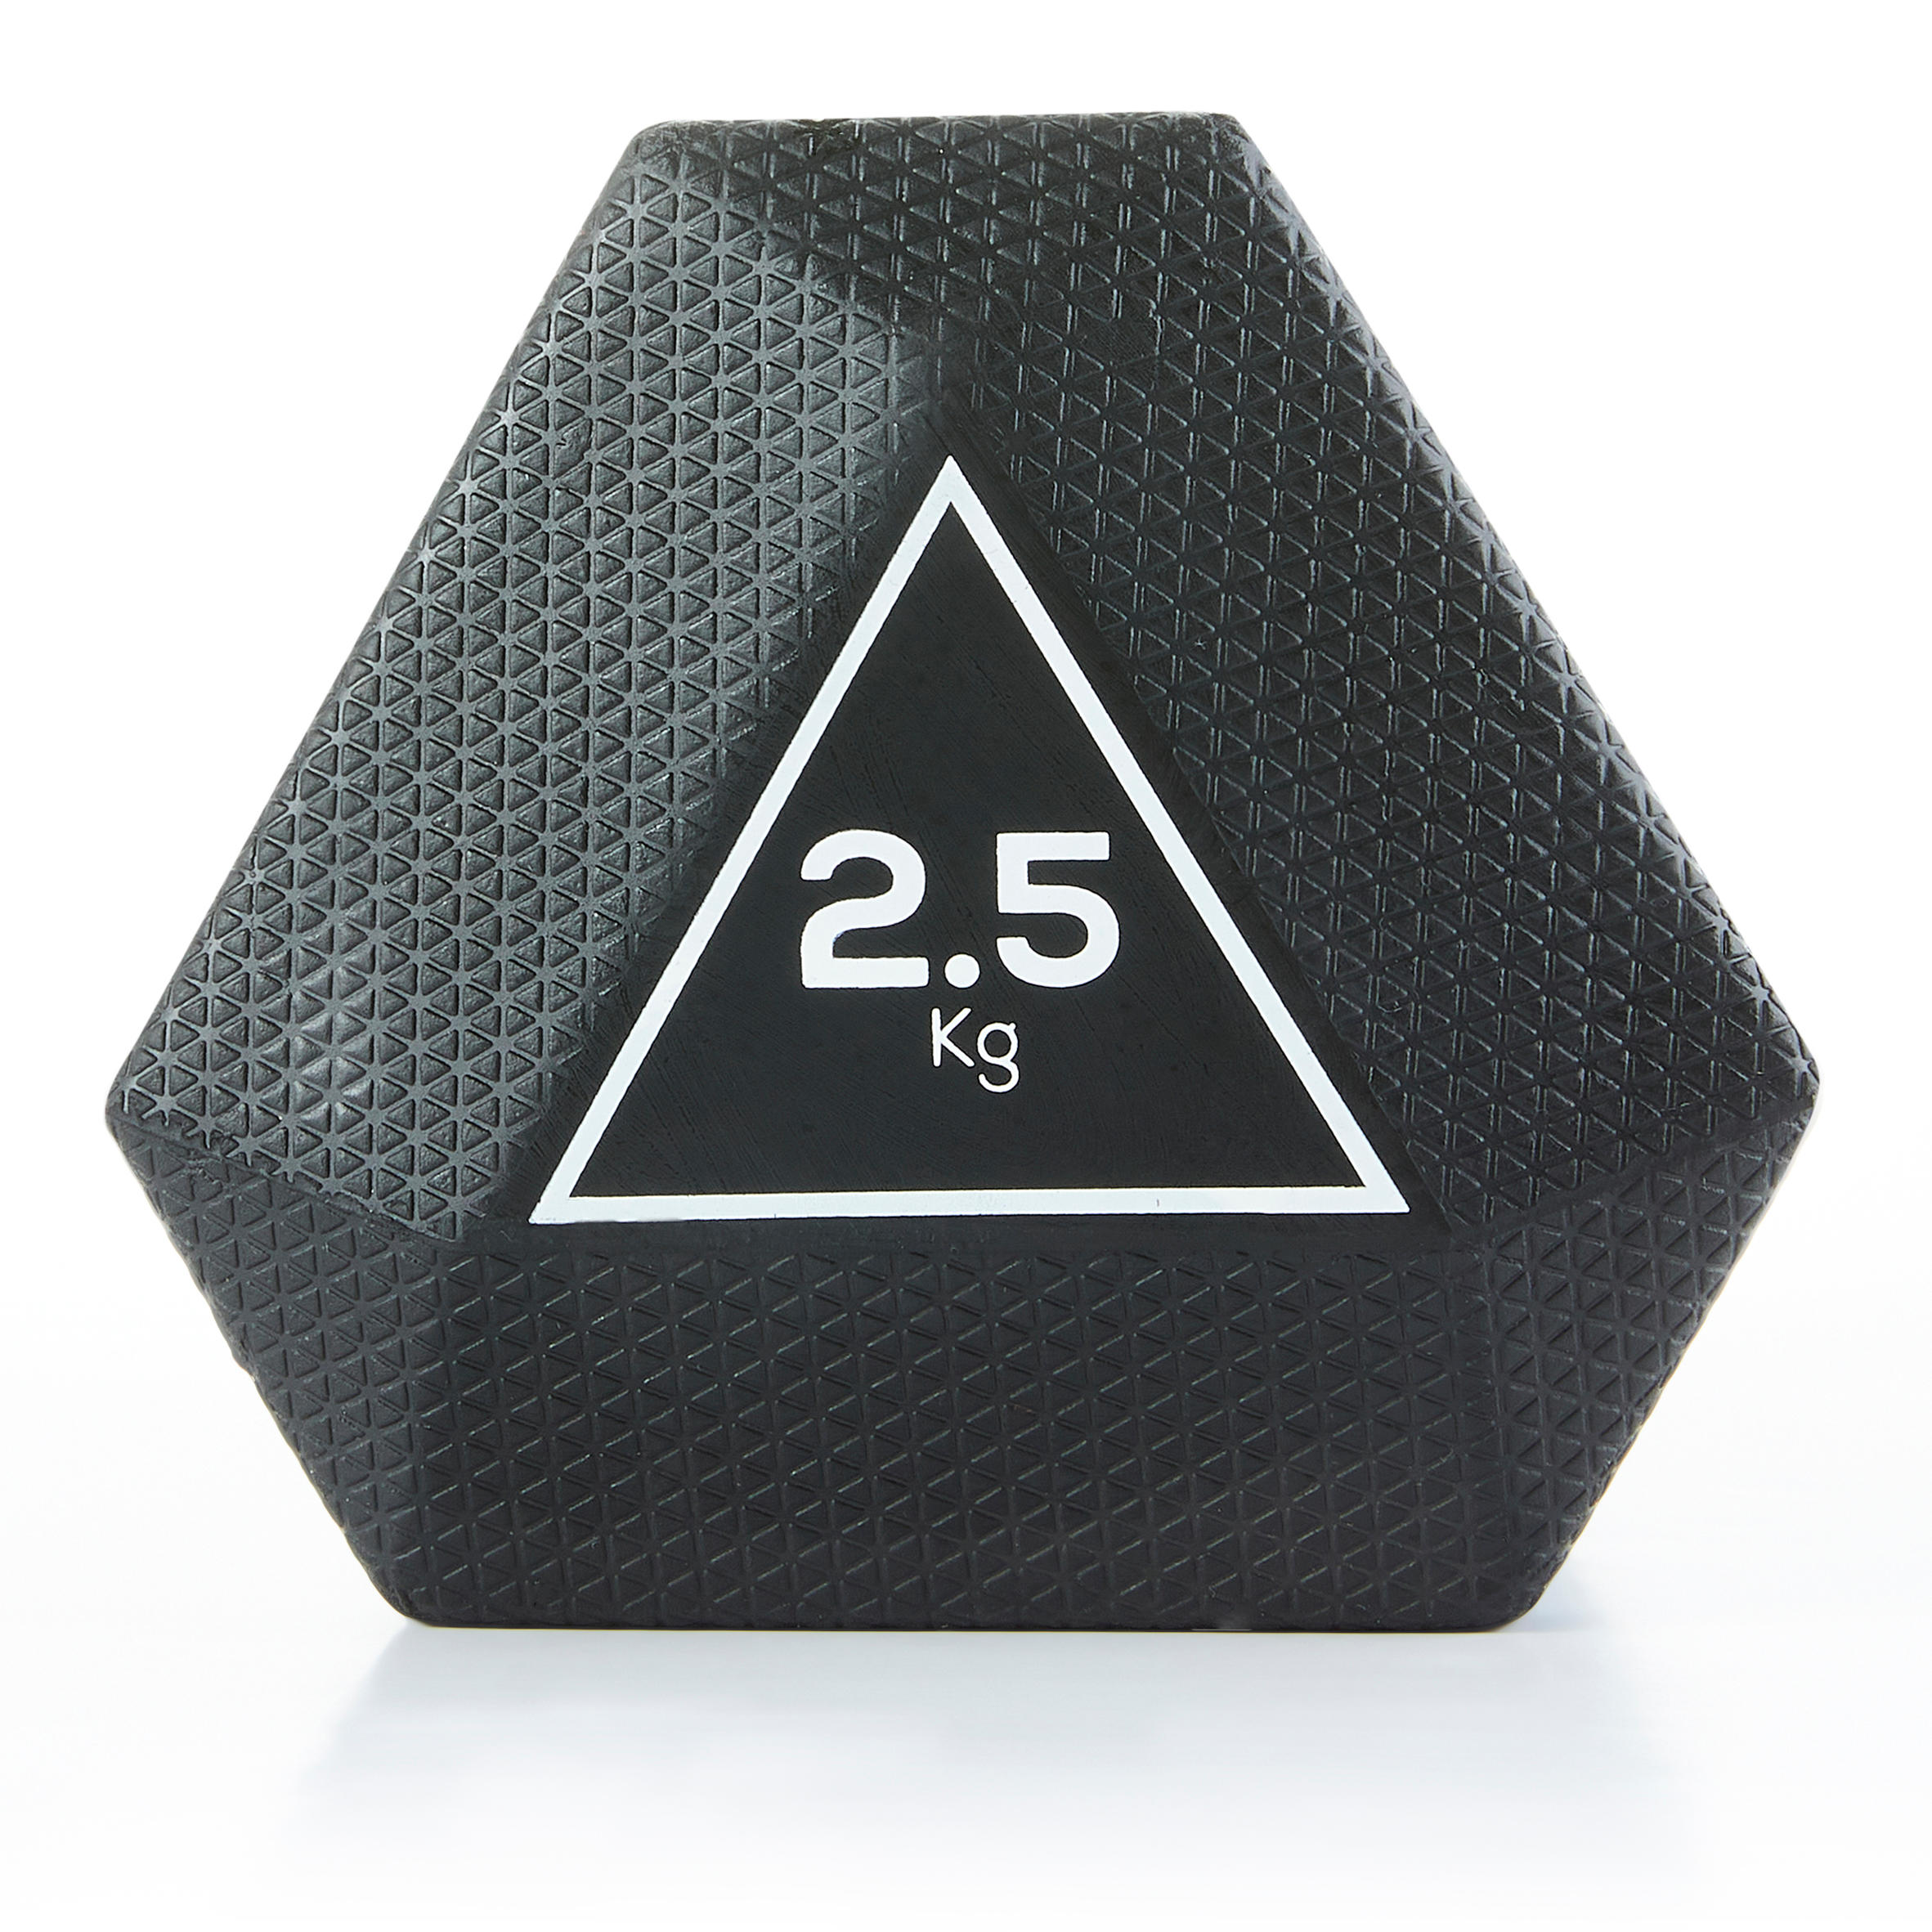 Haltère hexagonal 2,5 kg (5.5 lbs) - CORENGTH